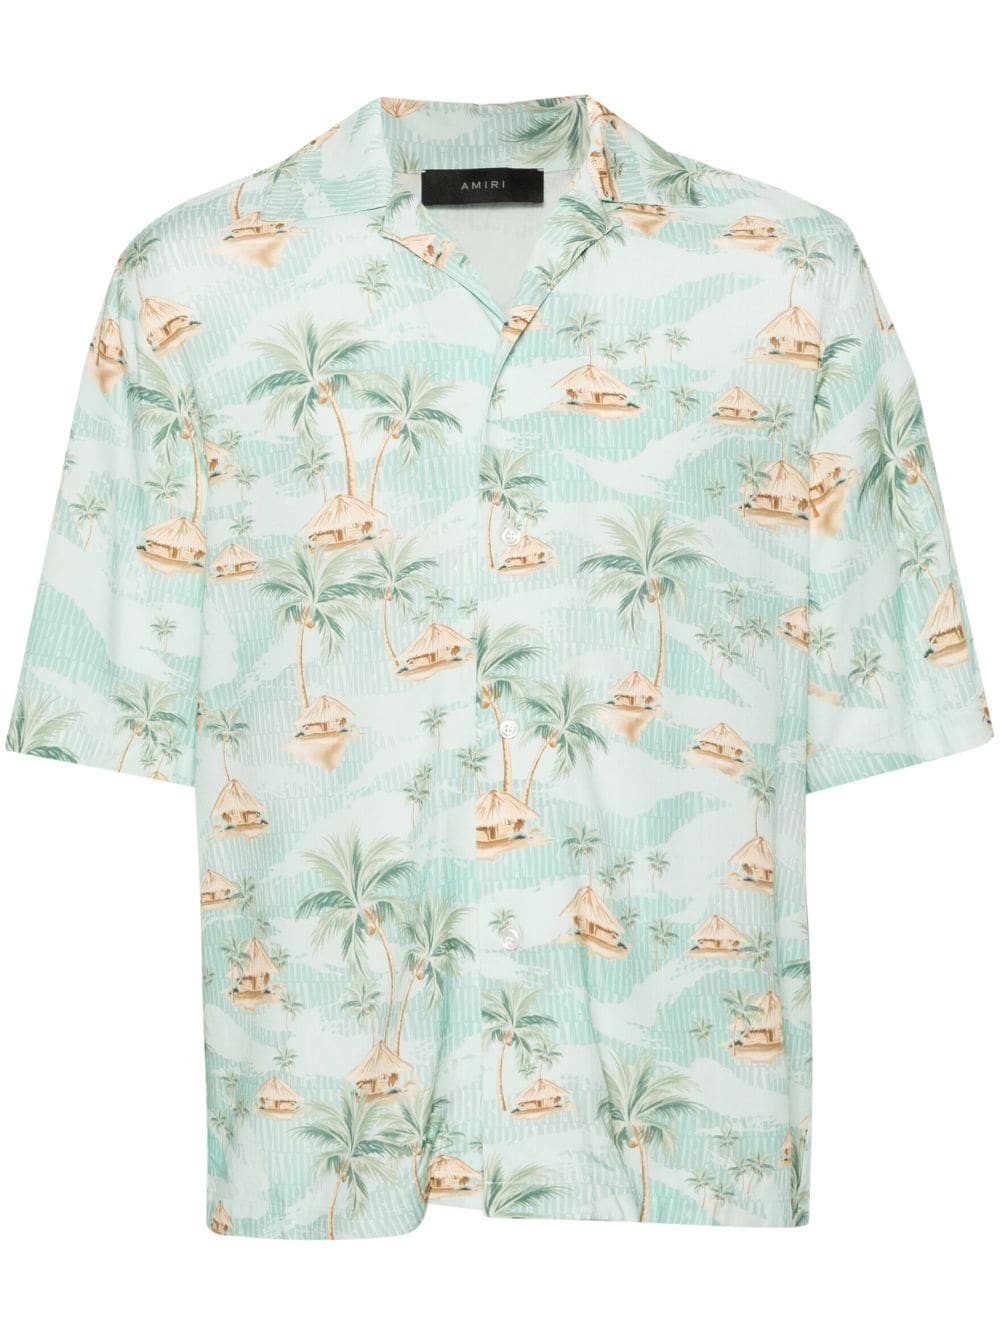 Repeat Palm Camp shirt